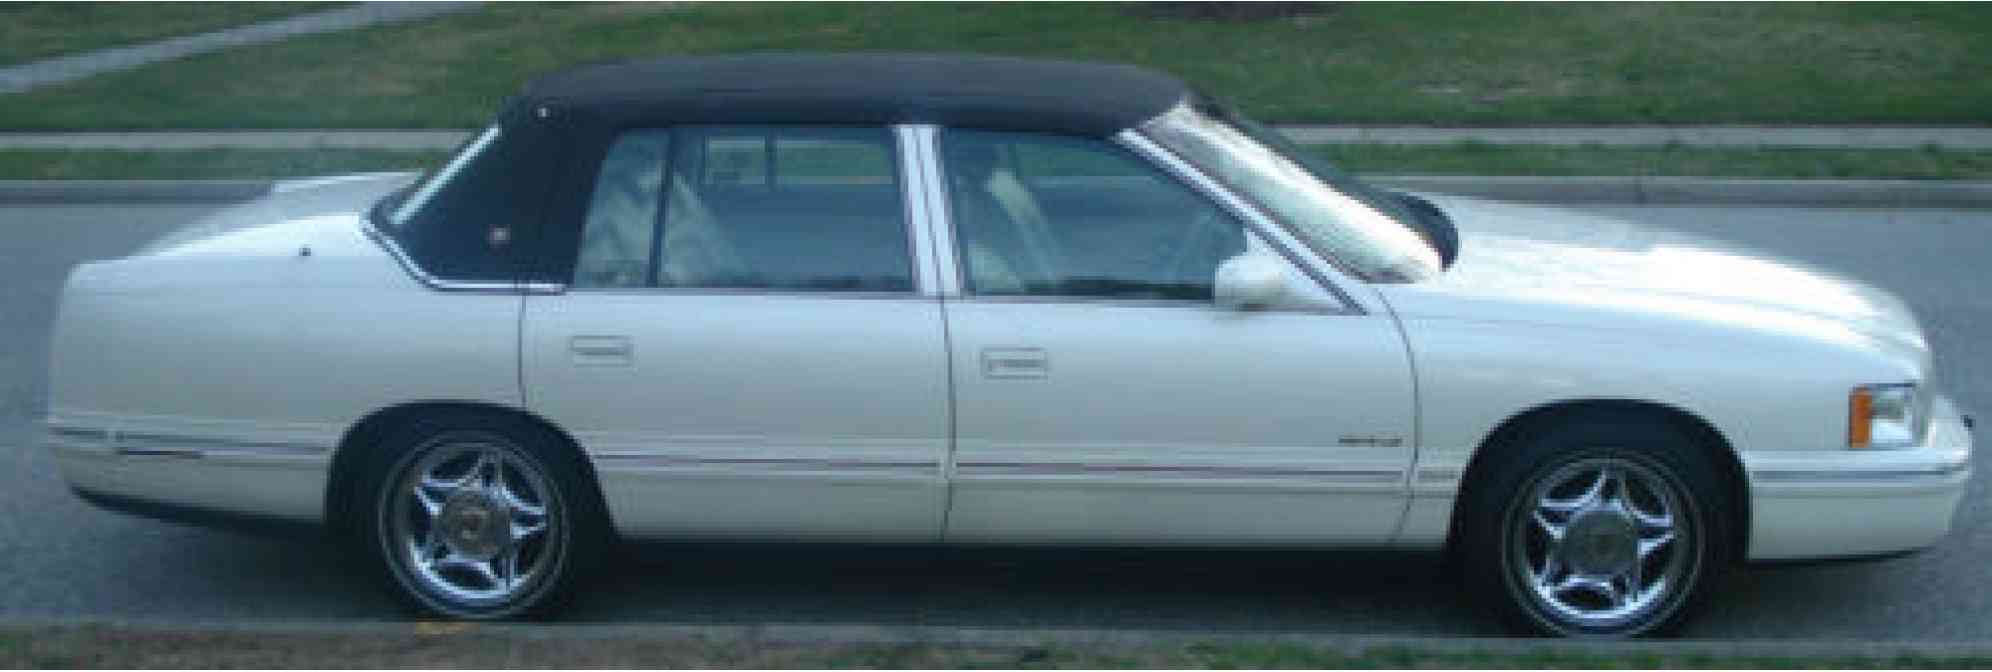 1999 Cadillac DeVille ESTATE SALE!